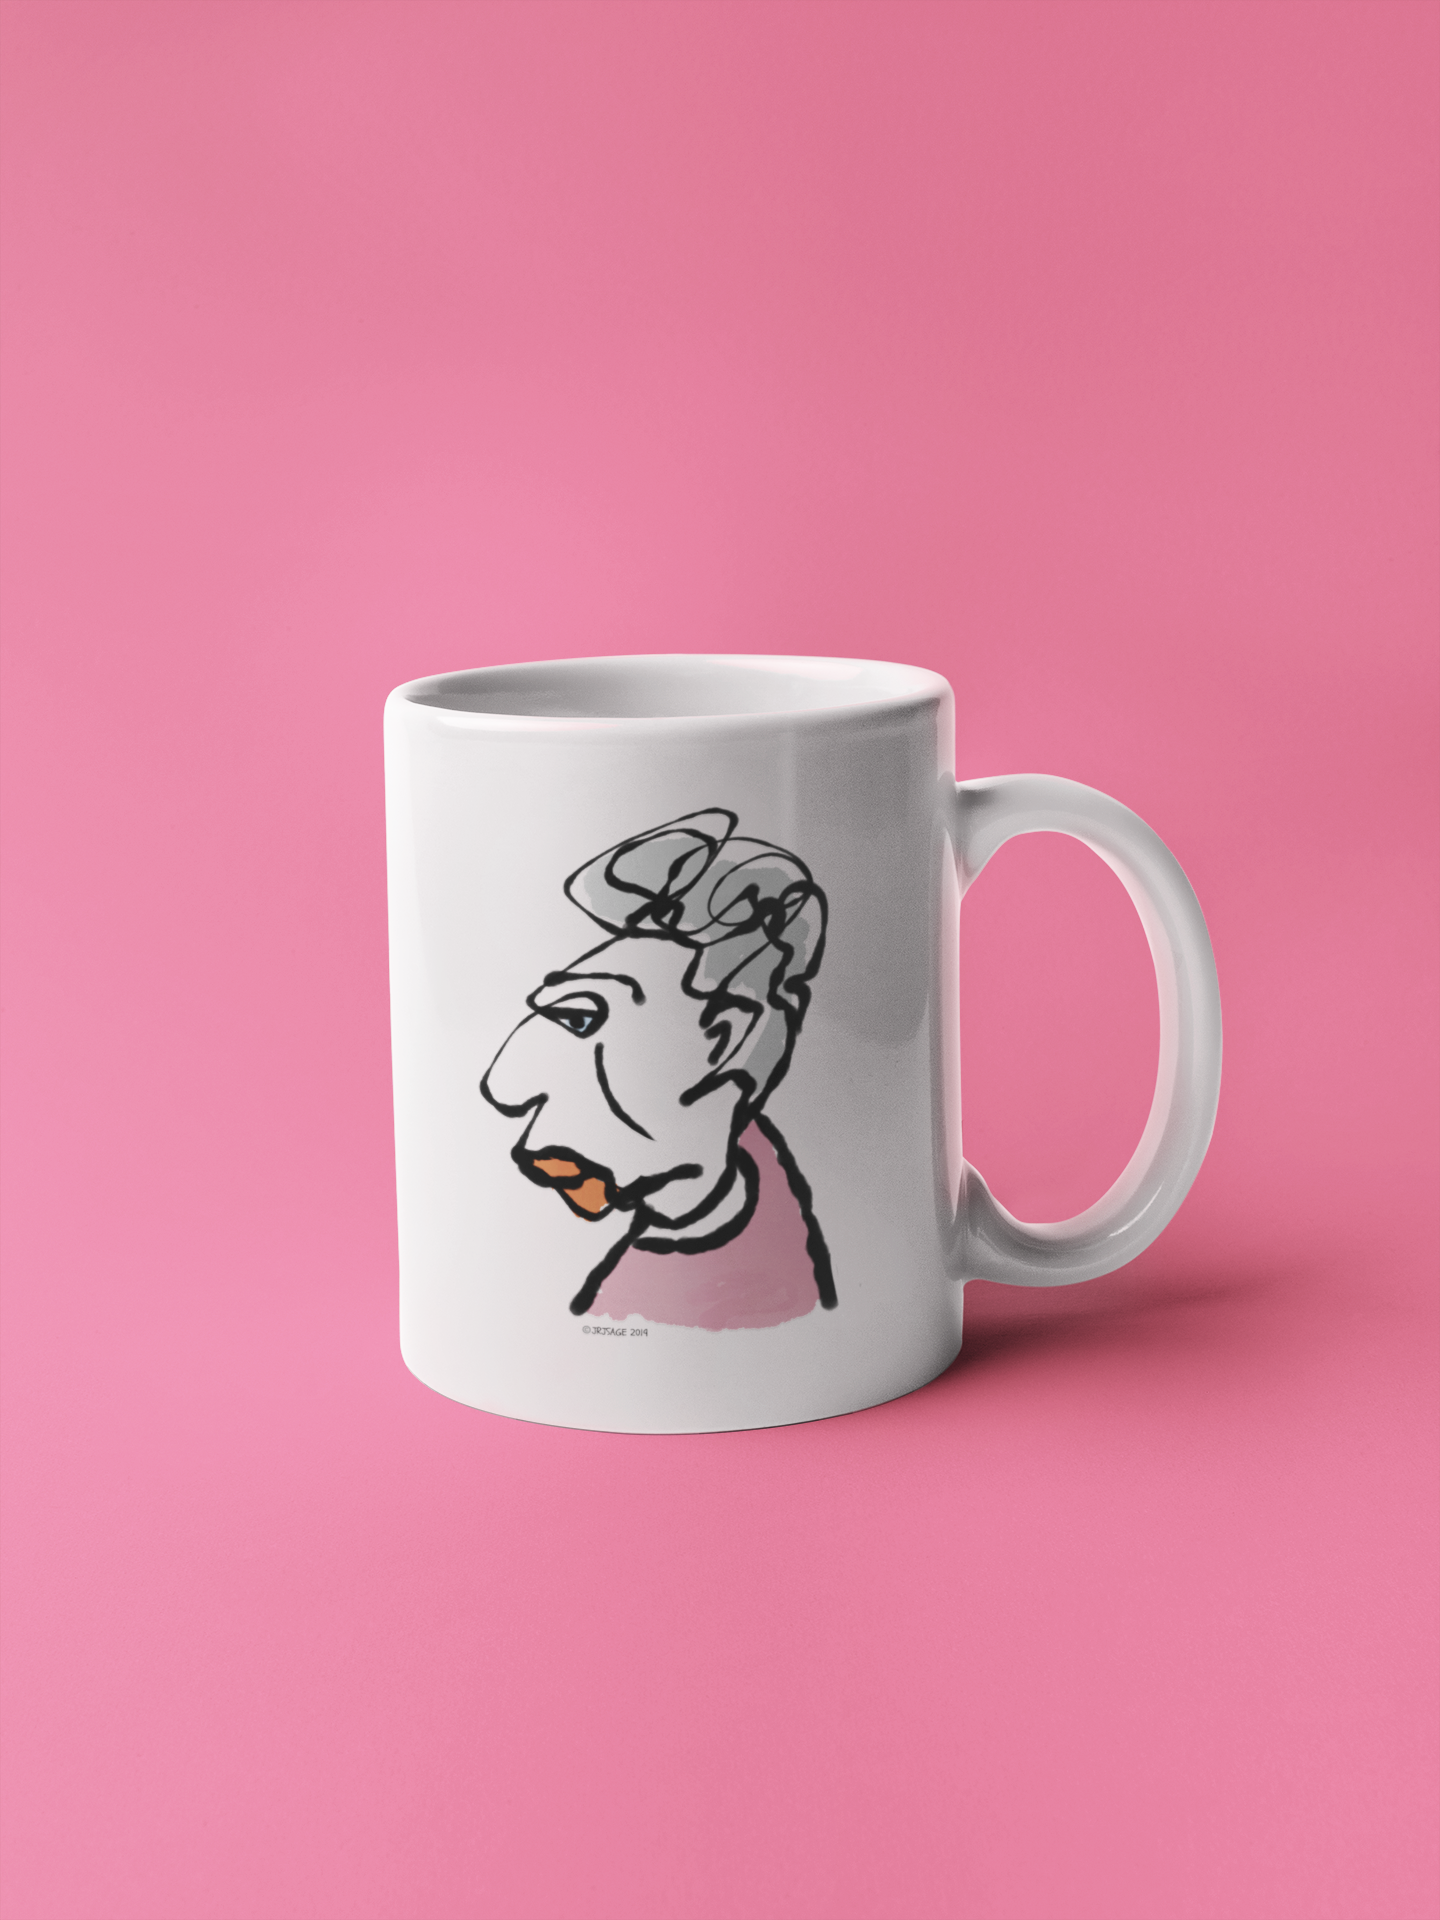 Glamorous Granny illustration on a white ceramic mug by Hector and Bone